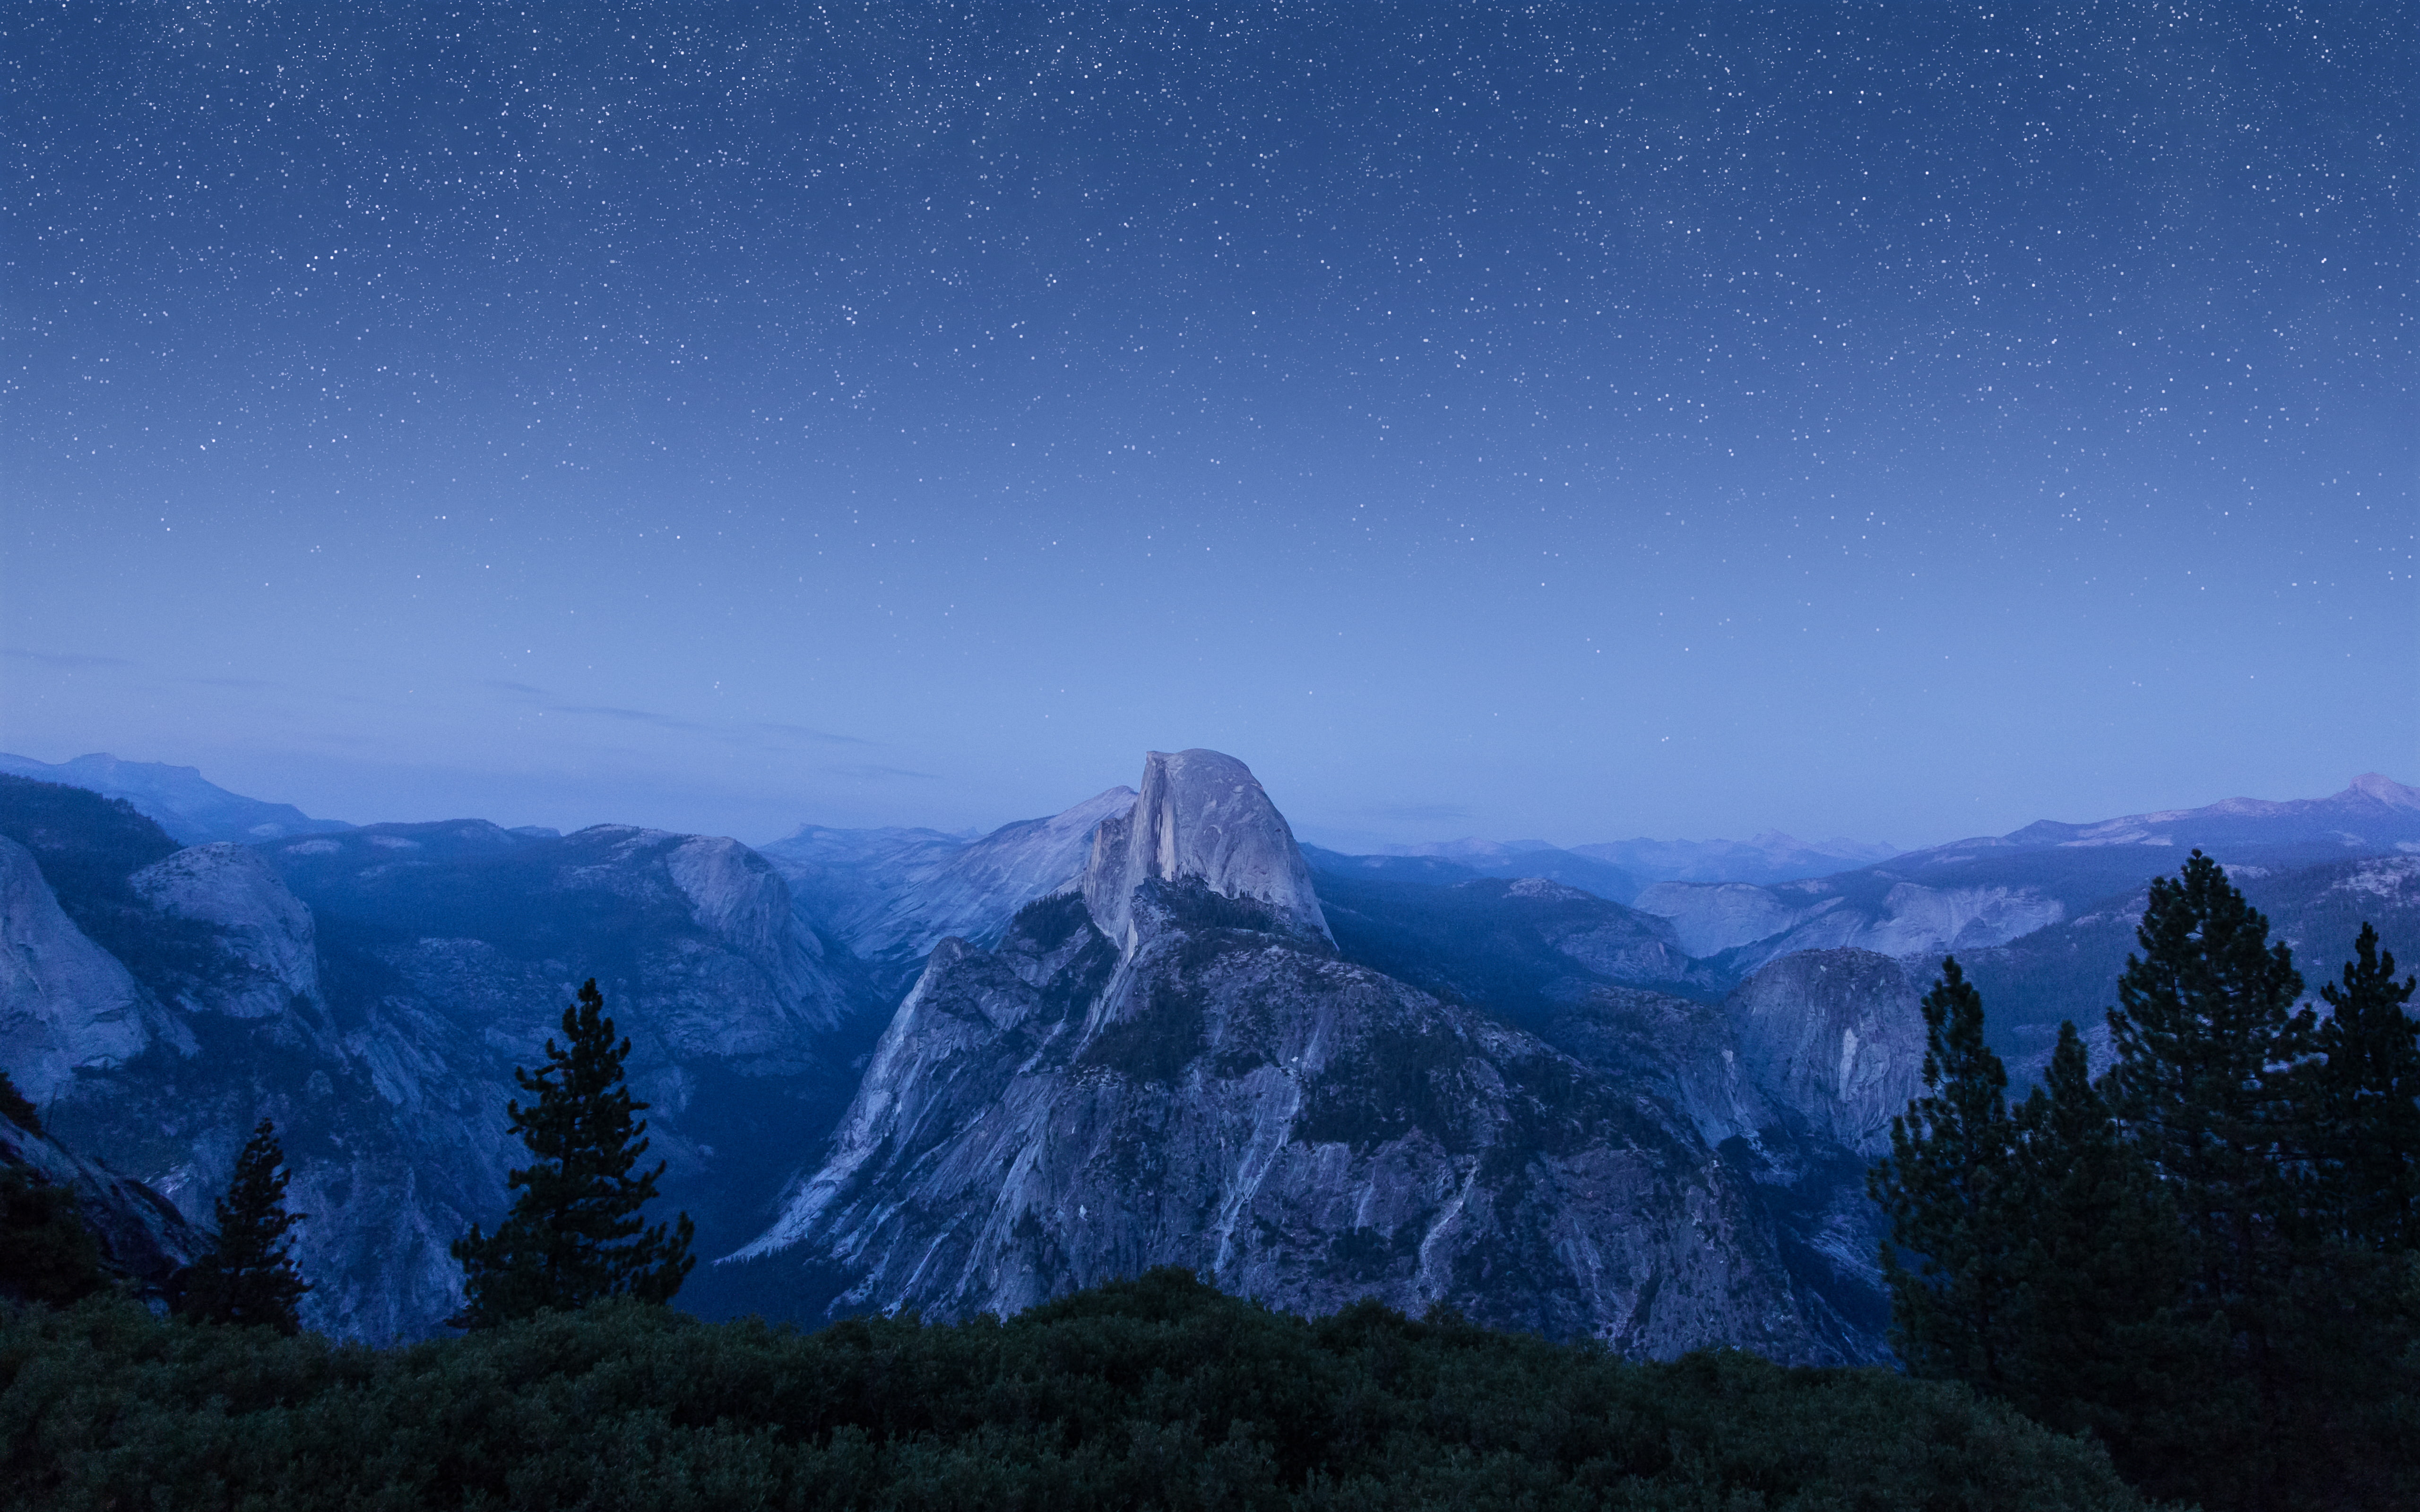 El Capitan, Yosemite National Park, Mountains, Starry sky, OS X El Capitan